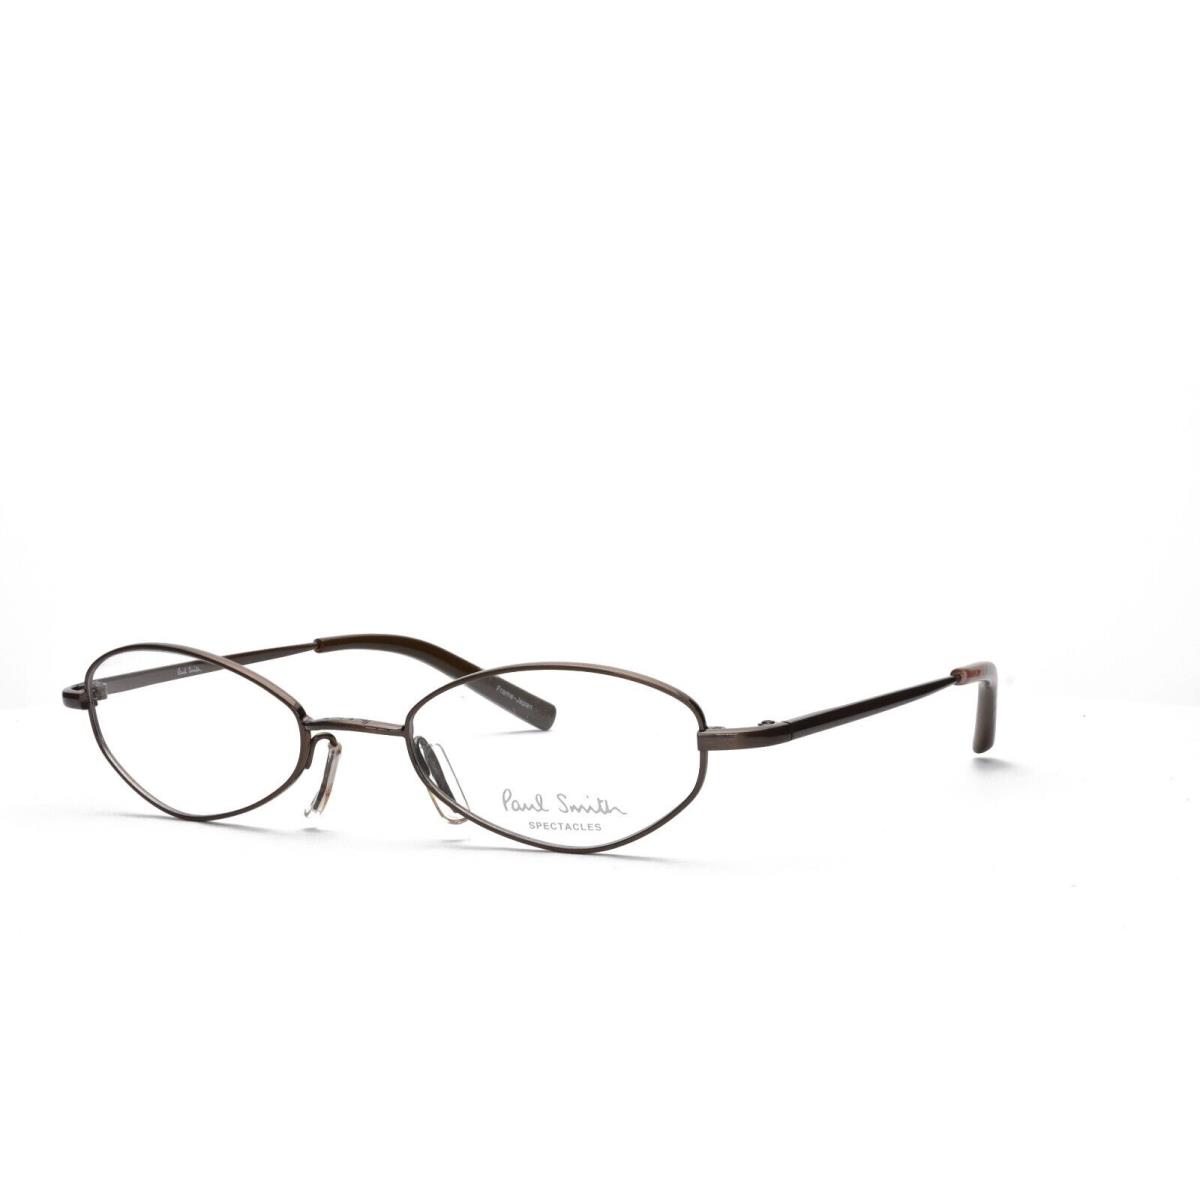 Paul Smith 198 MC 48-19-132 Dark Taupe Vtg Vintage Eyeglasses Frames